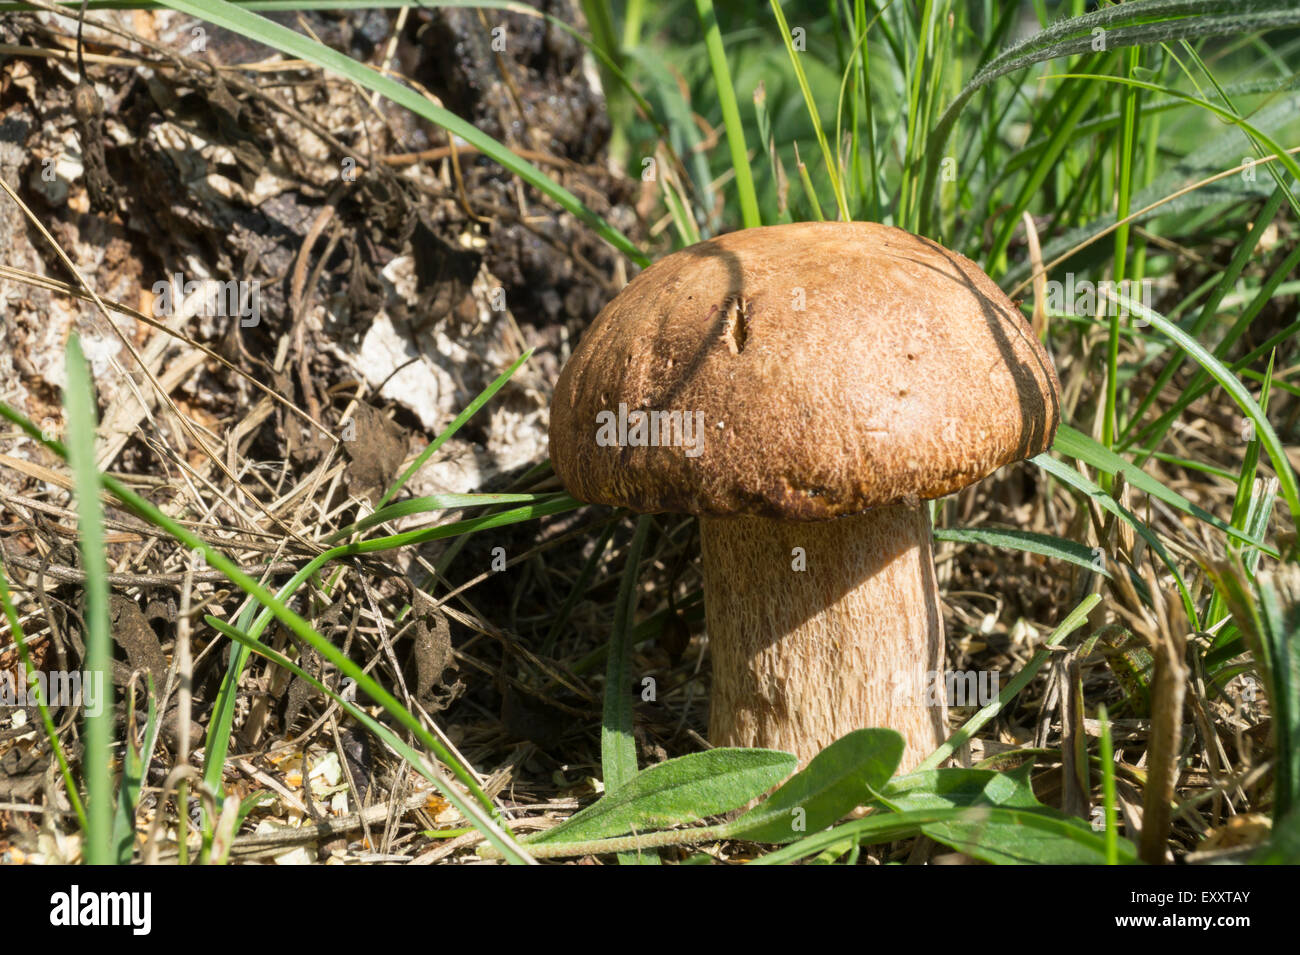 White mushroom grows in wood Stock Photo